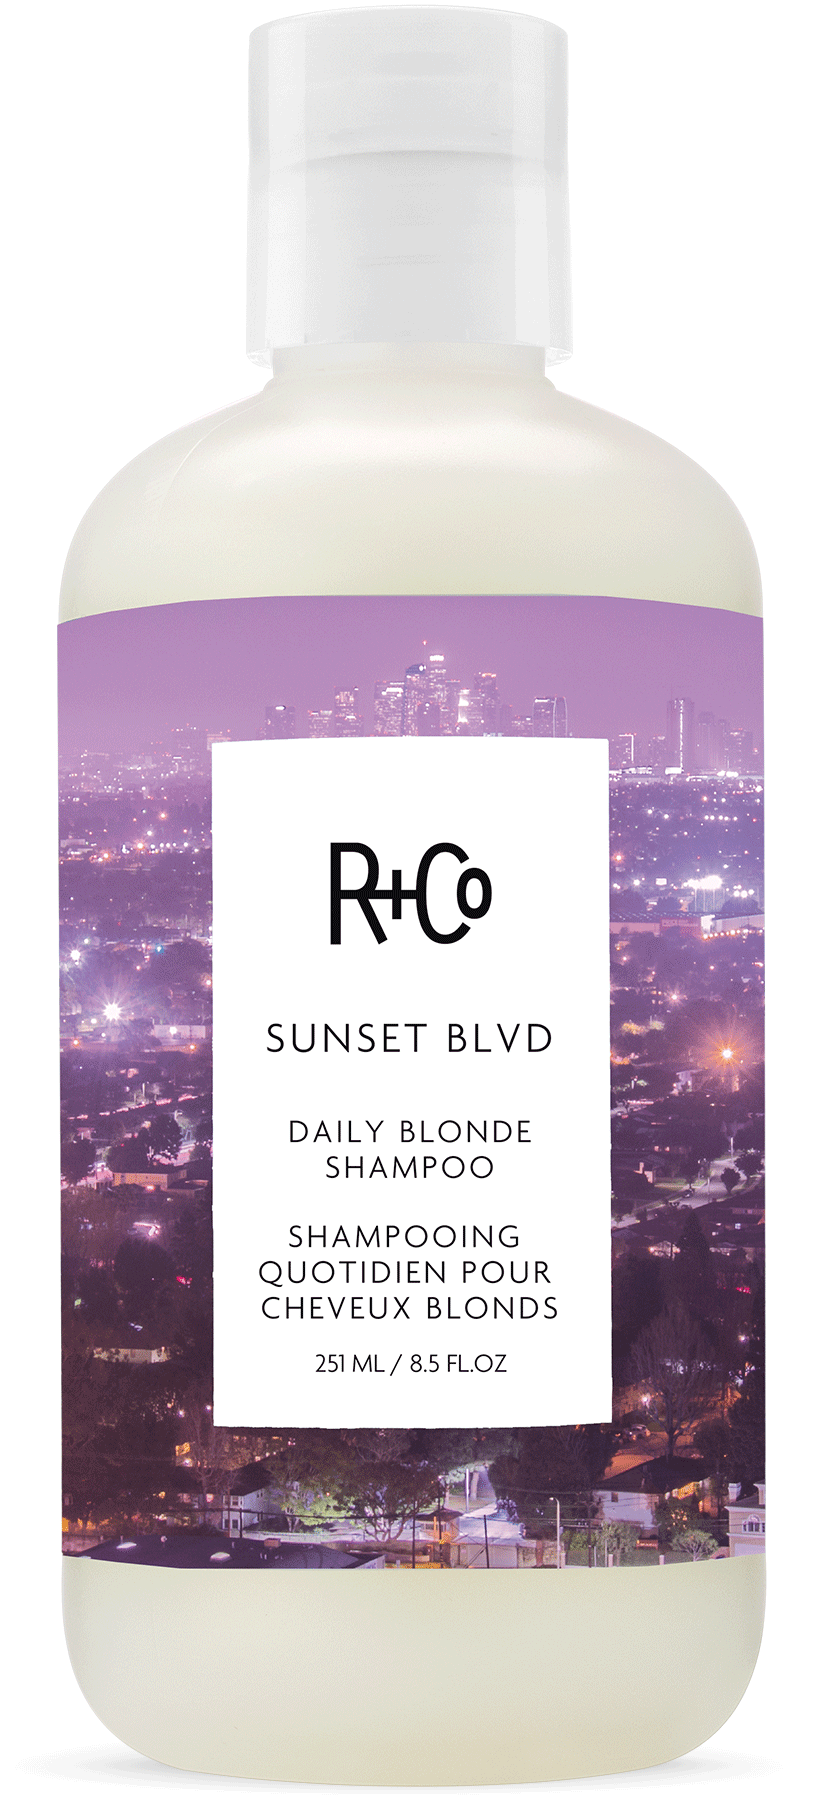 R+CO-Sunset Blvd-Daily Blonde Shampoo